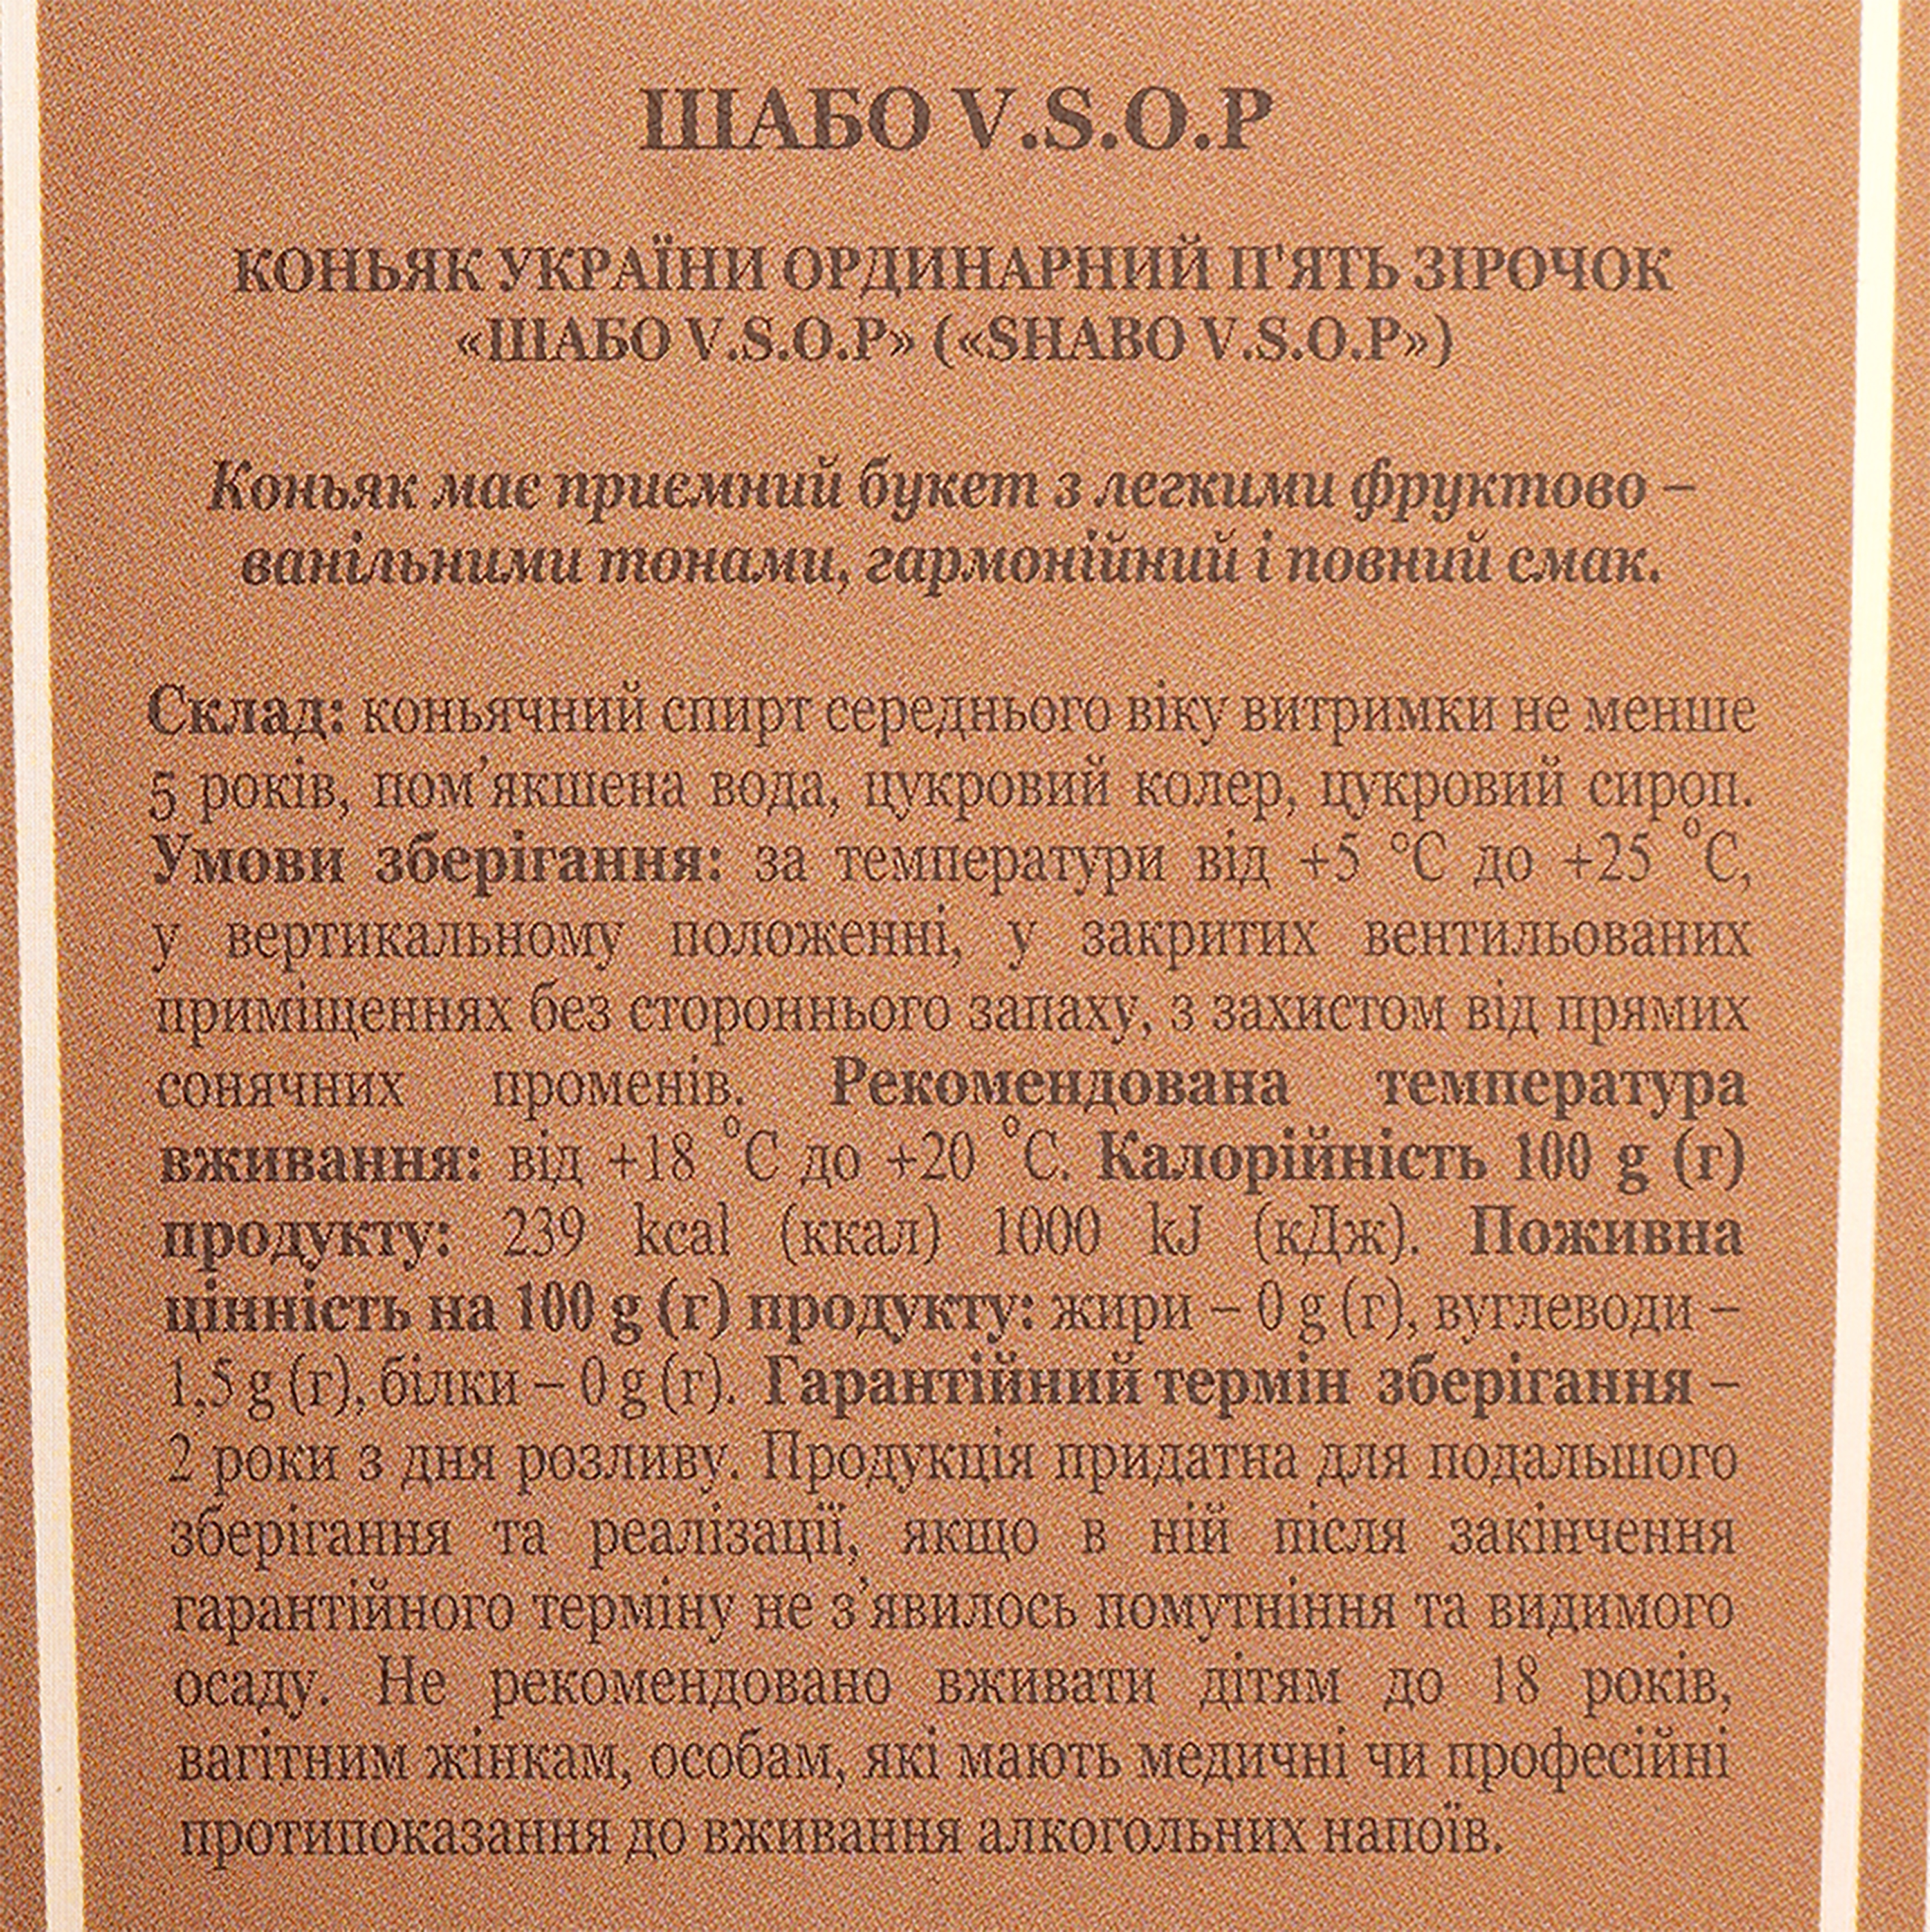 Коньяк Украины Shabo V.S.O.P., 5 звезд, подарочная упаковка, 40%, 0,5 л - фото 4